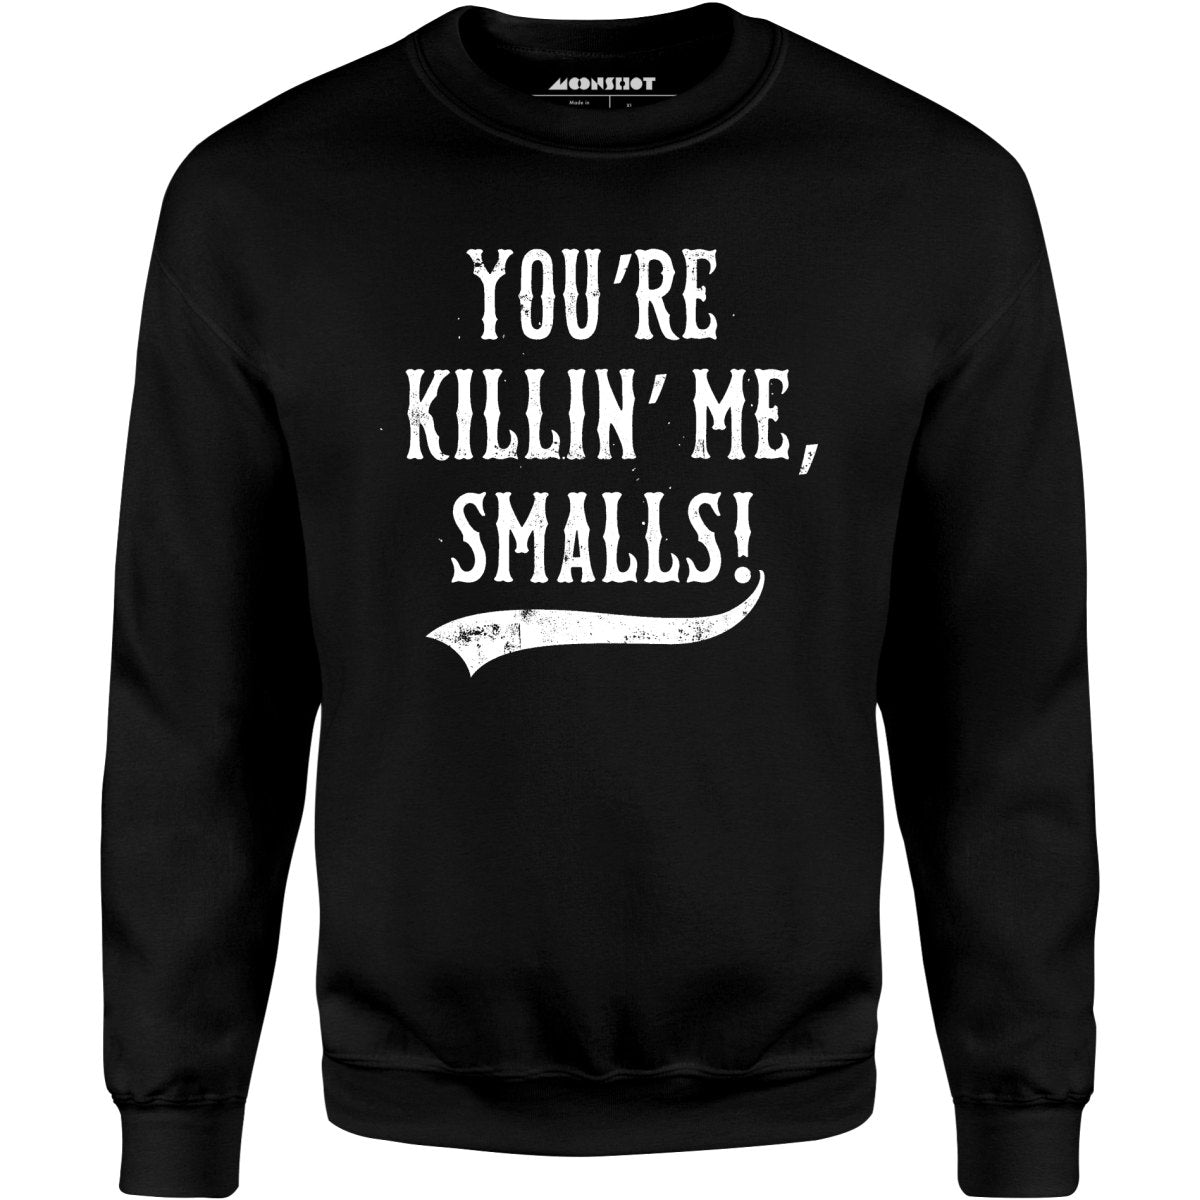 You're Killin' Me, Smalls! - Unisex Sweatshirt